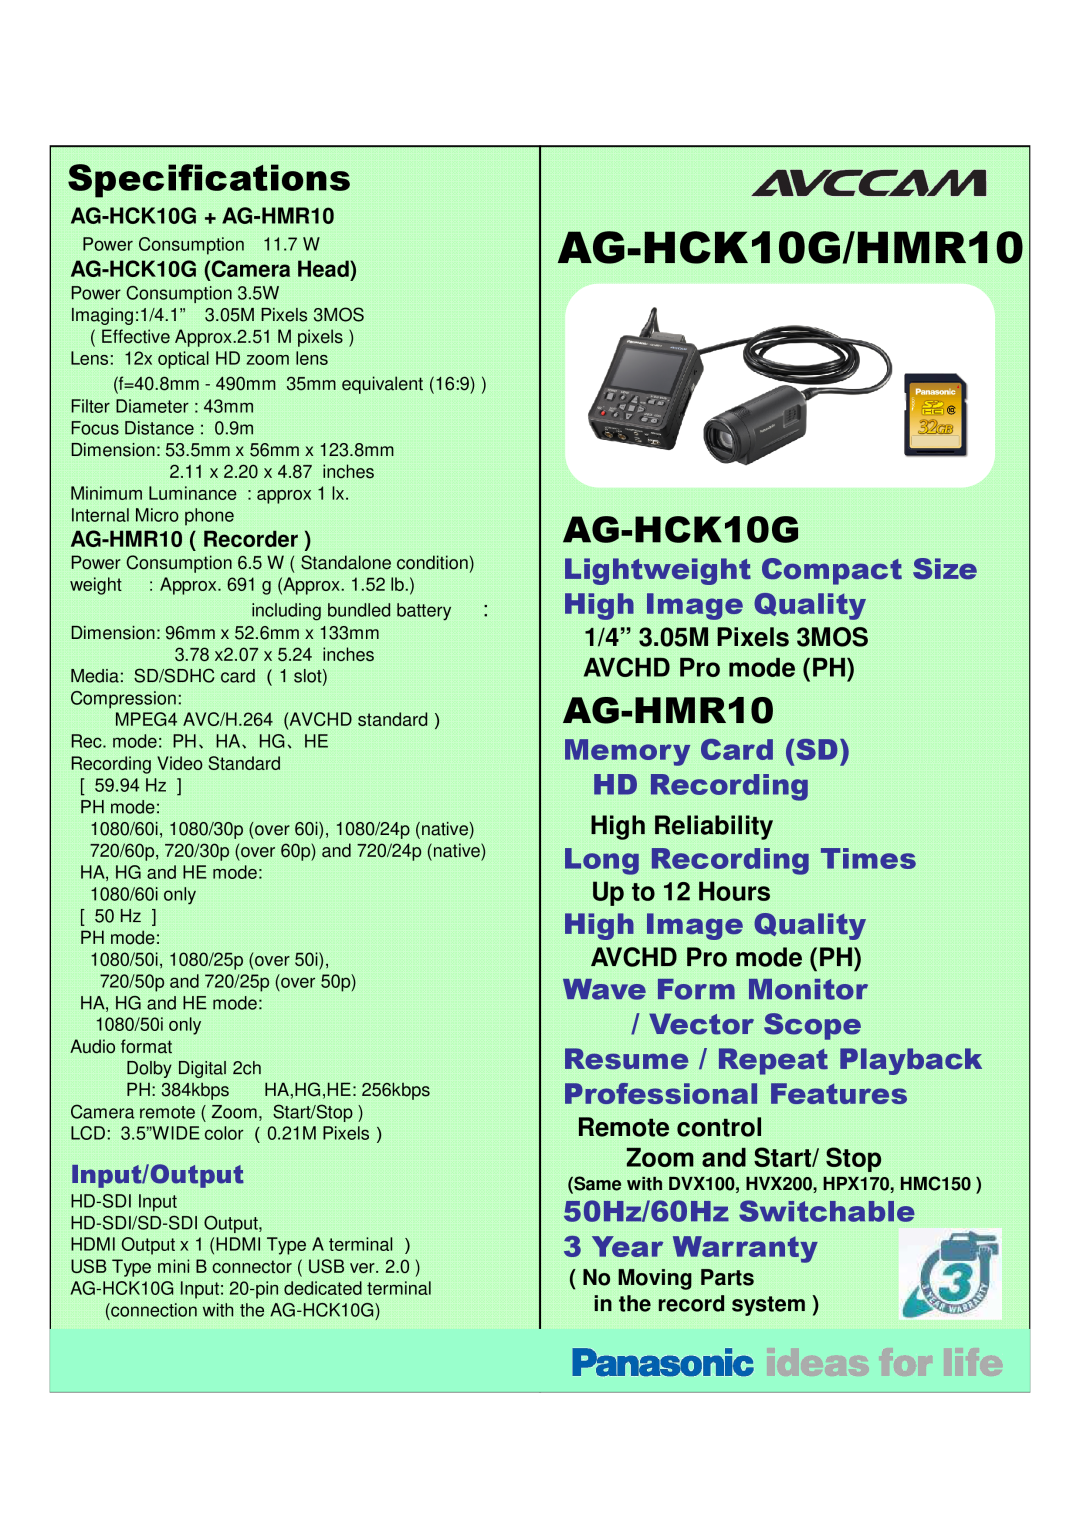 Panasonic AG-HMR10 manual Lightweight Compact Size High Image Quality, Memory Card SD HD Recording, Long Recording Times 